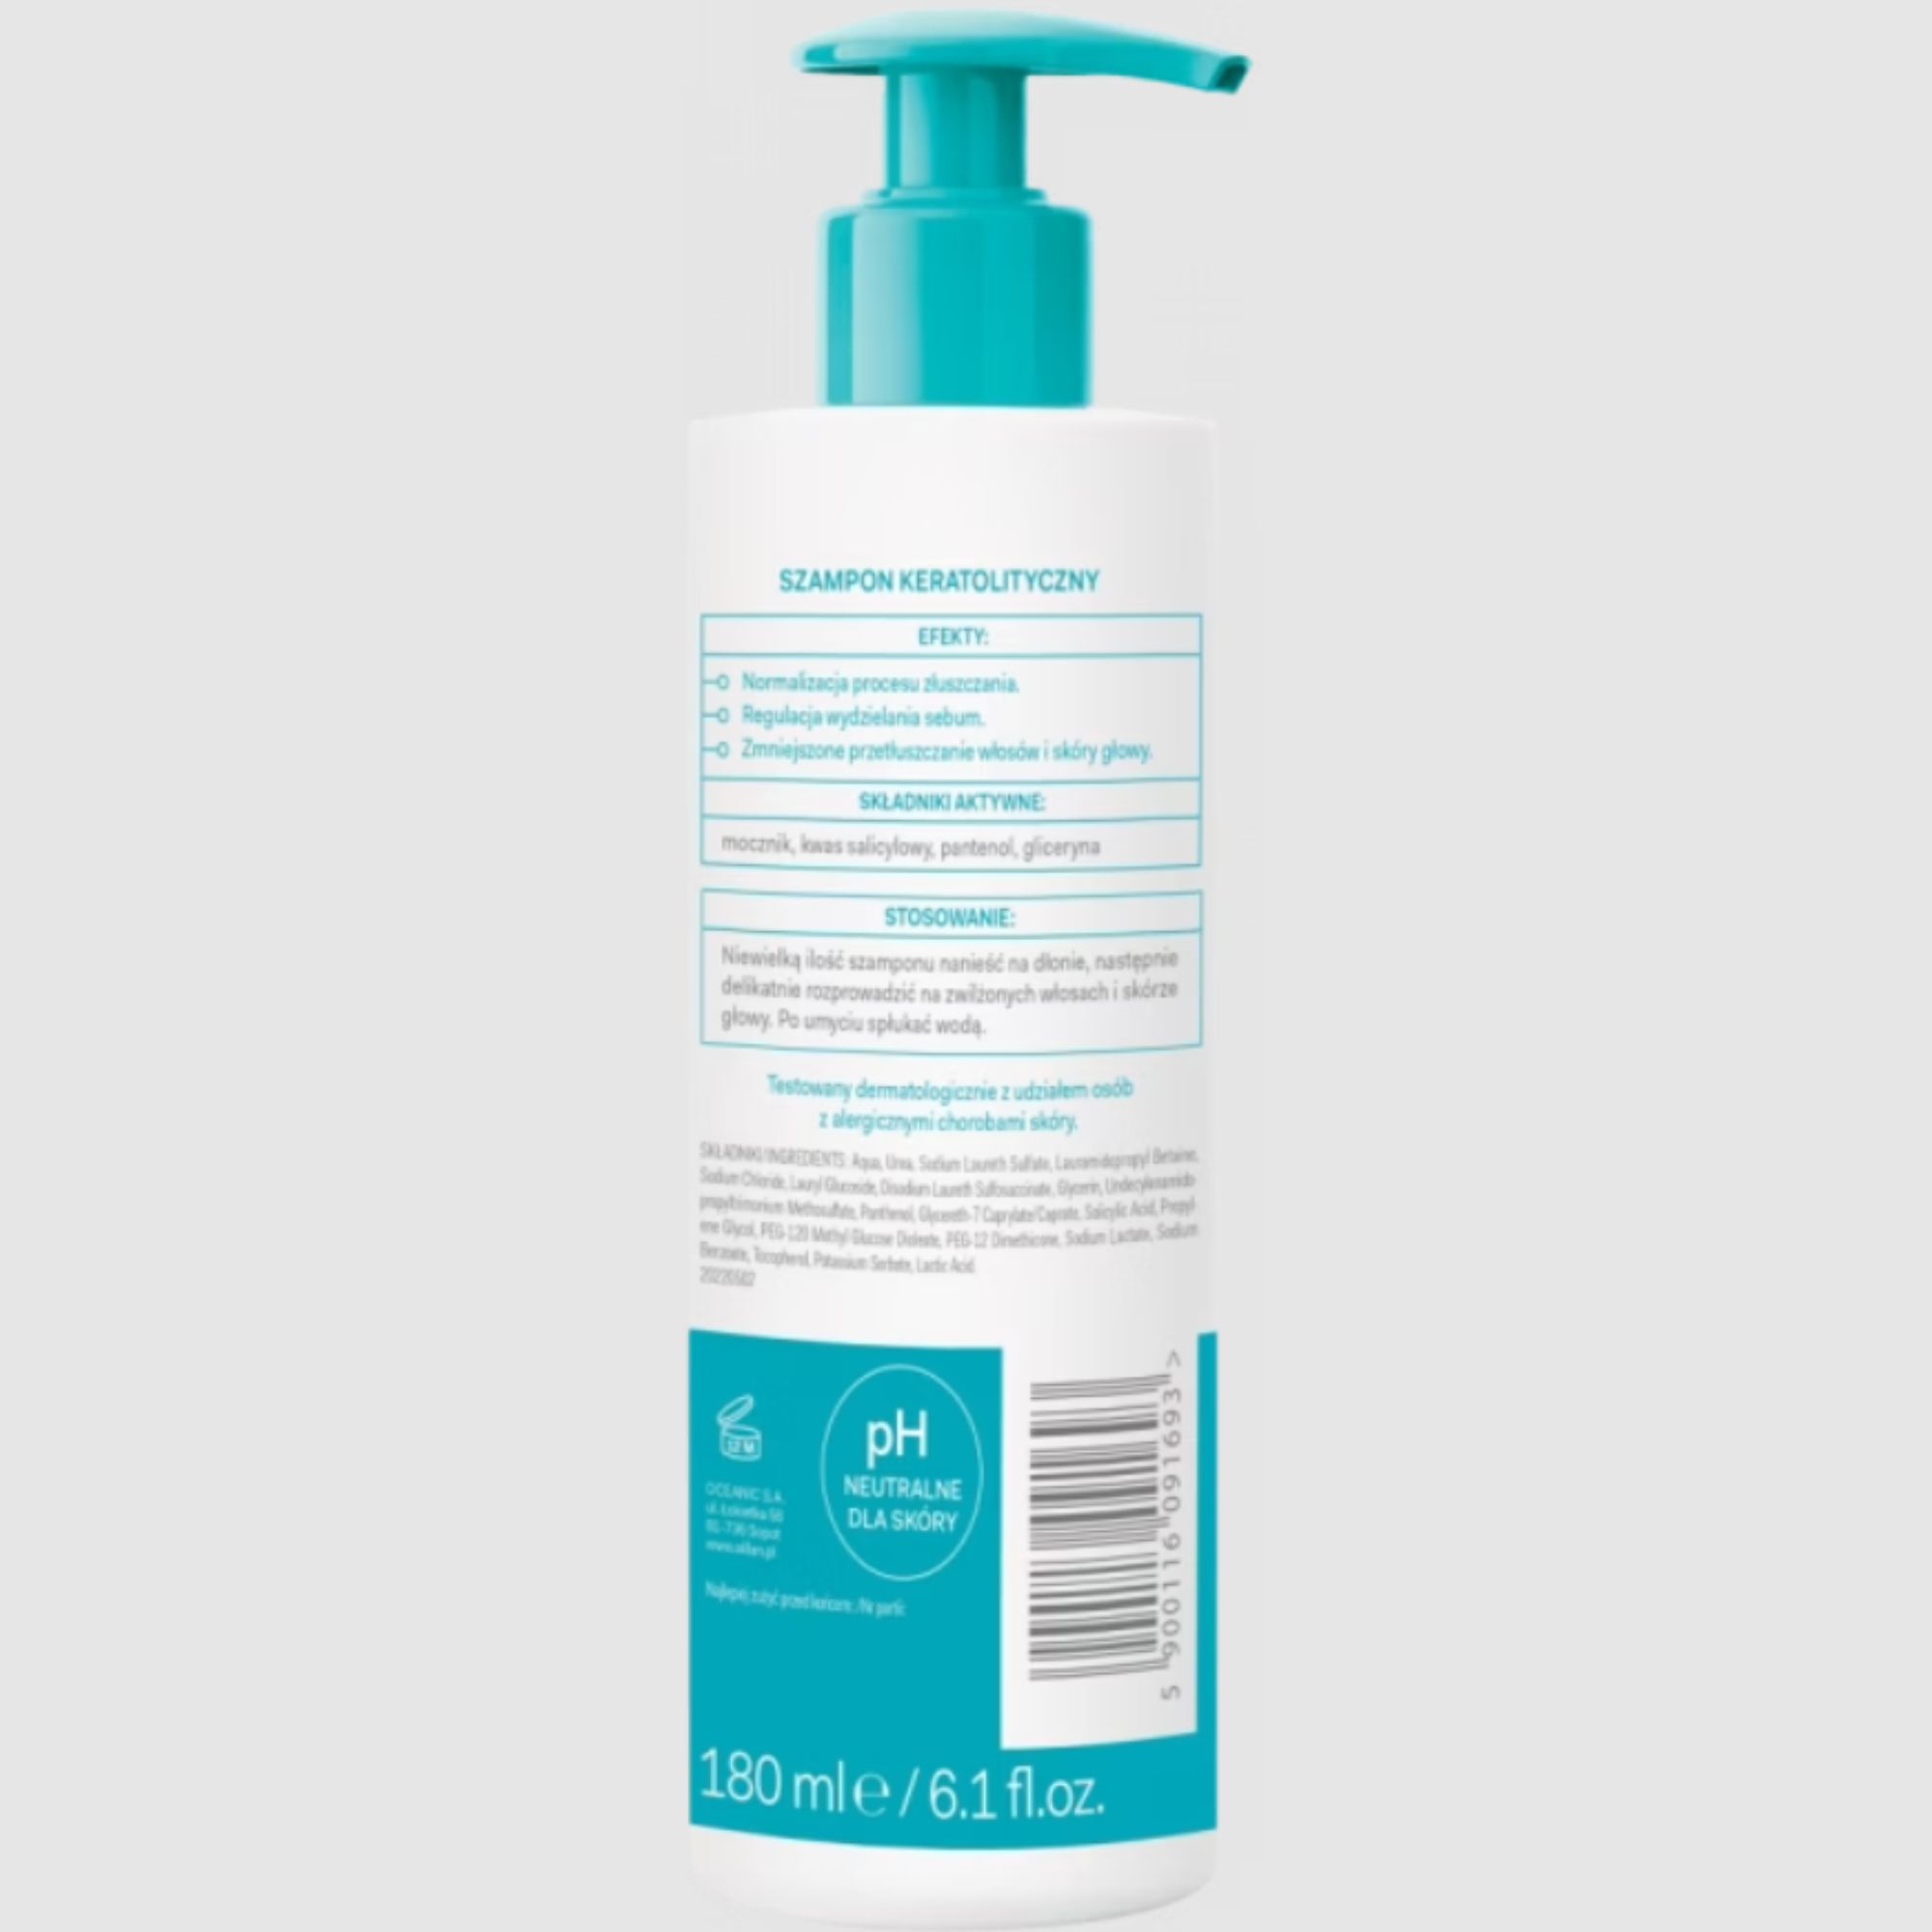 oillan med keratolityczny szampon dermatologiczny 150 ml